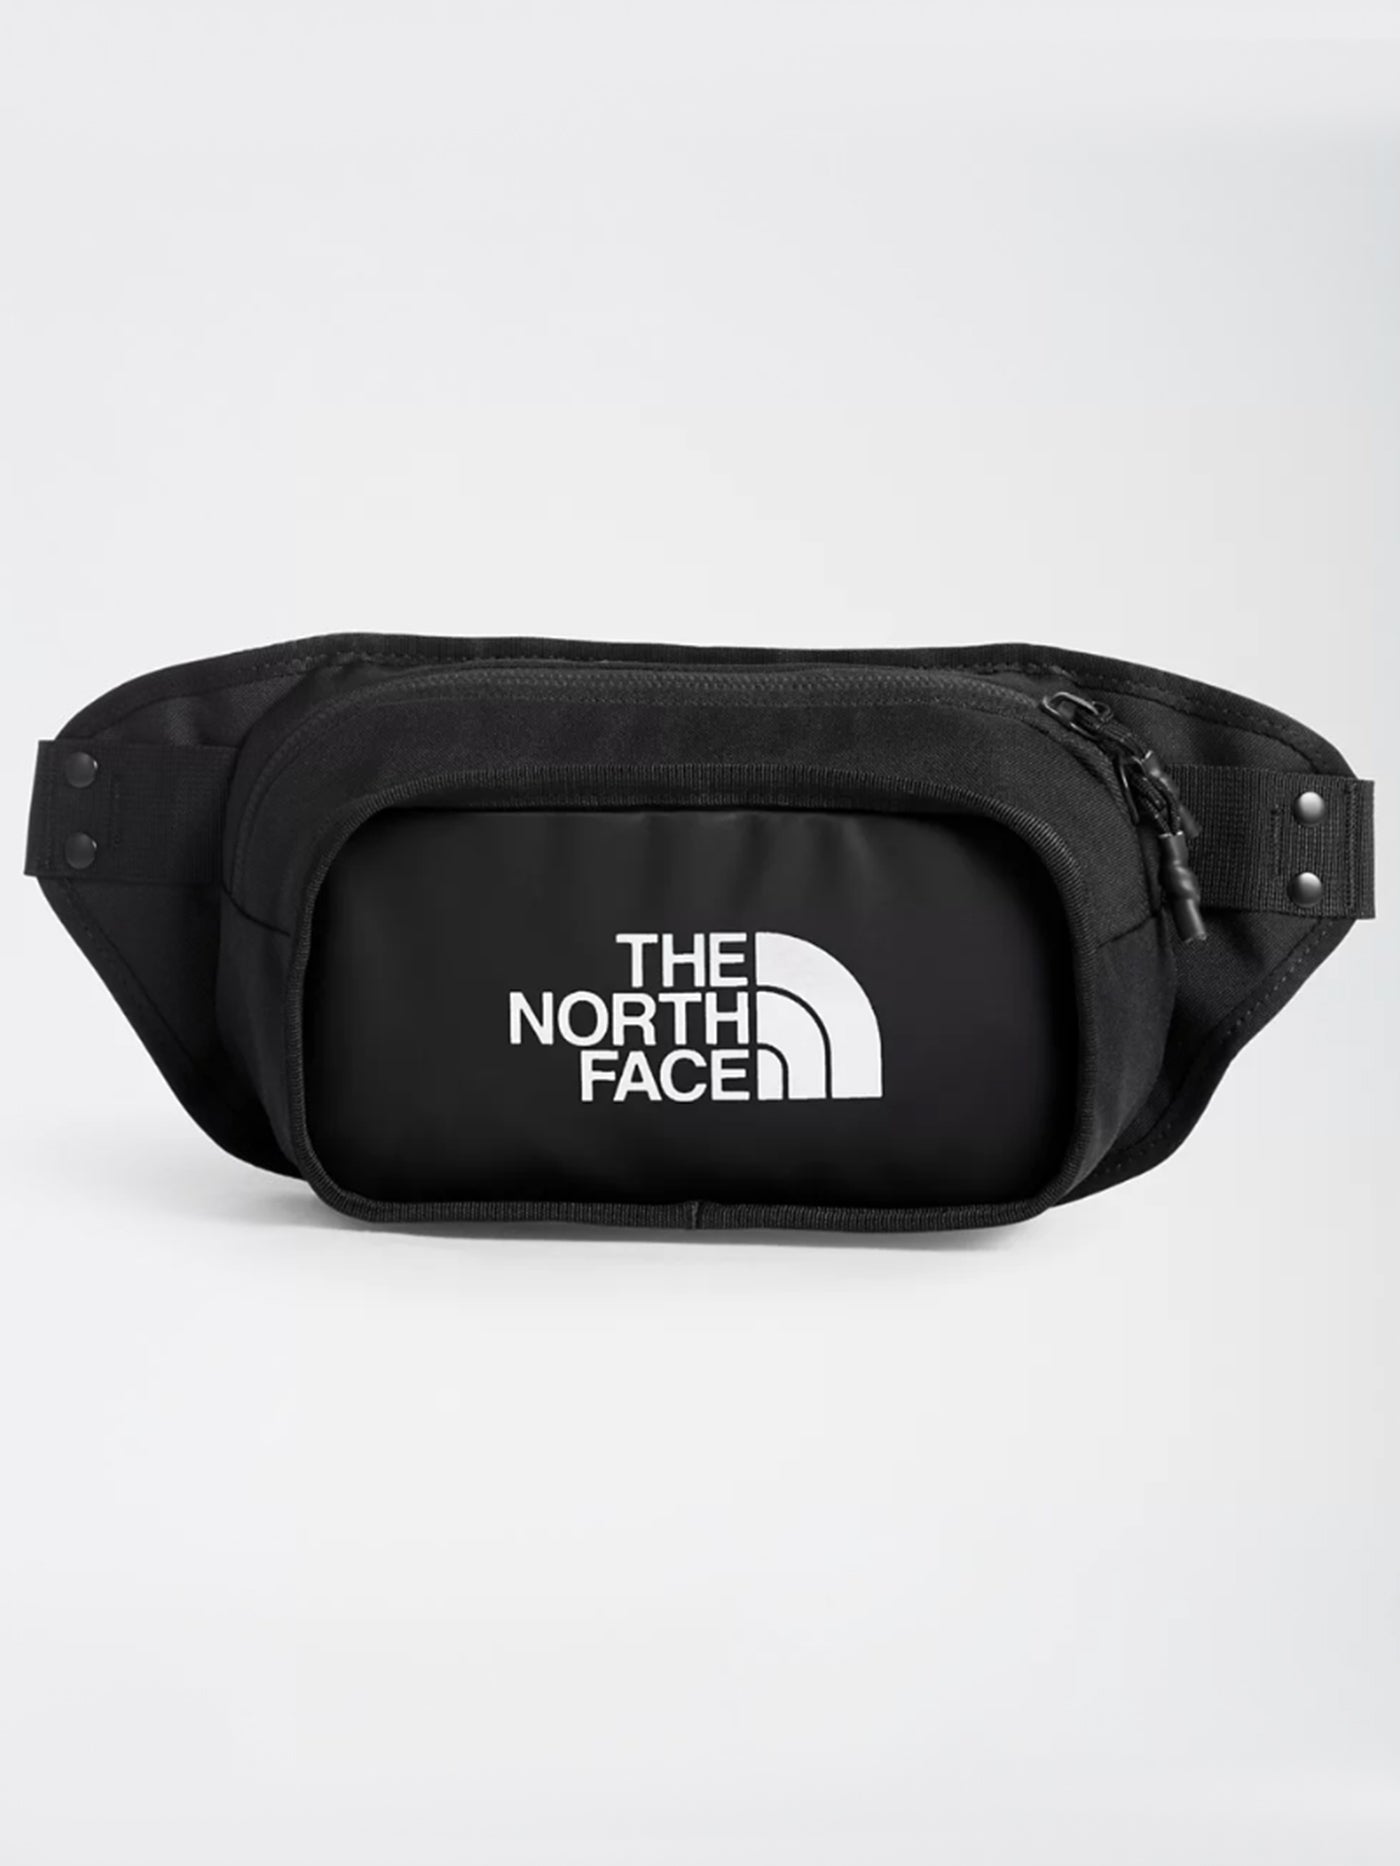 The North Face Explore Waist Bag